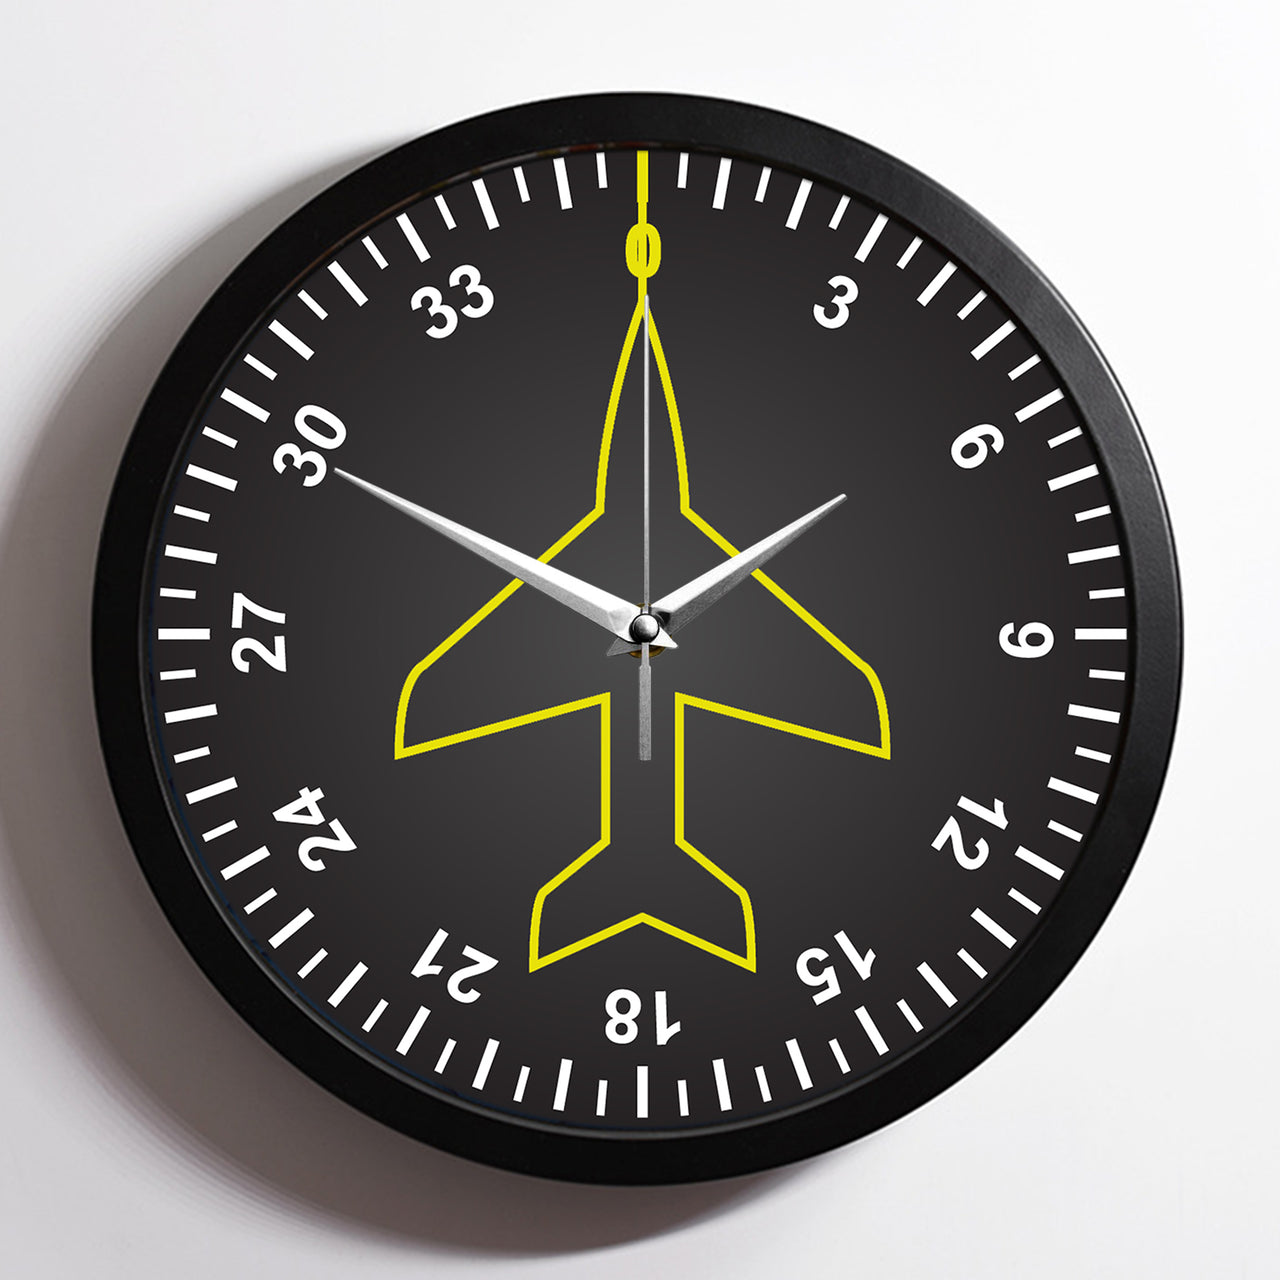 Airplane Instruments (Heading) Designed Wall Clocks